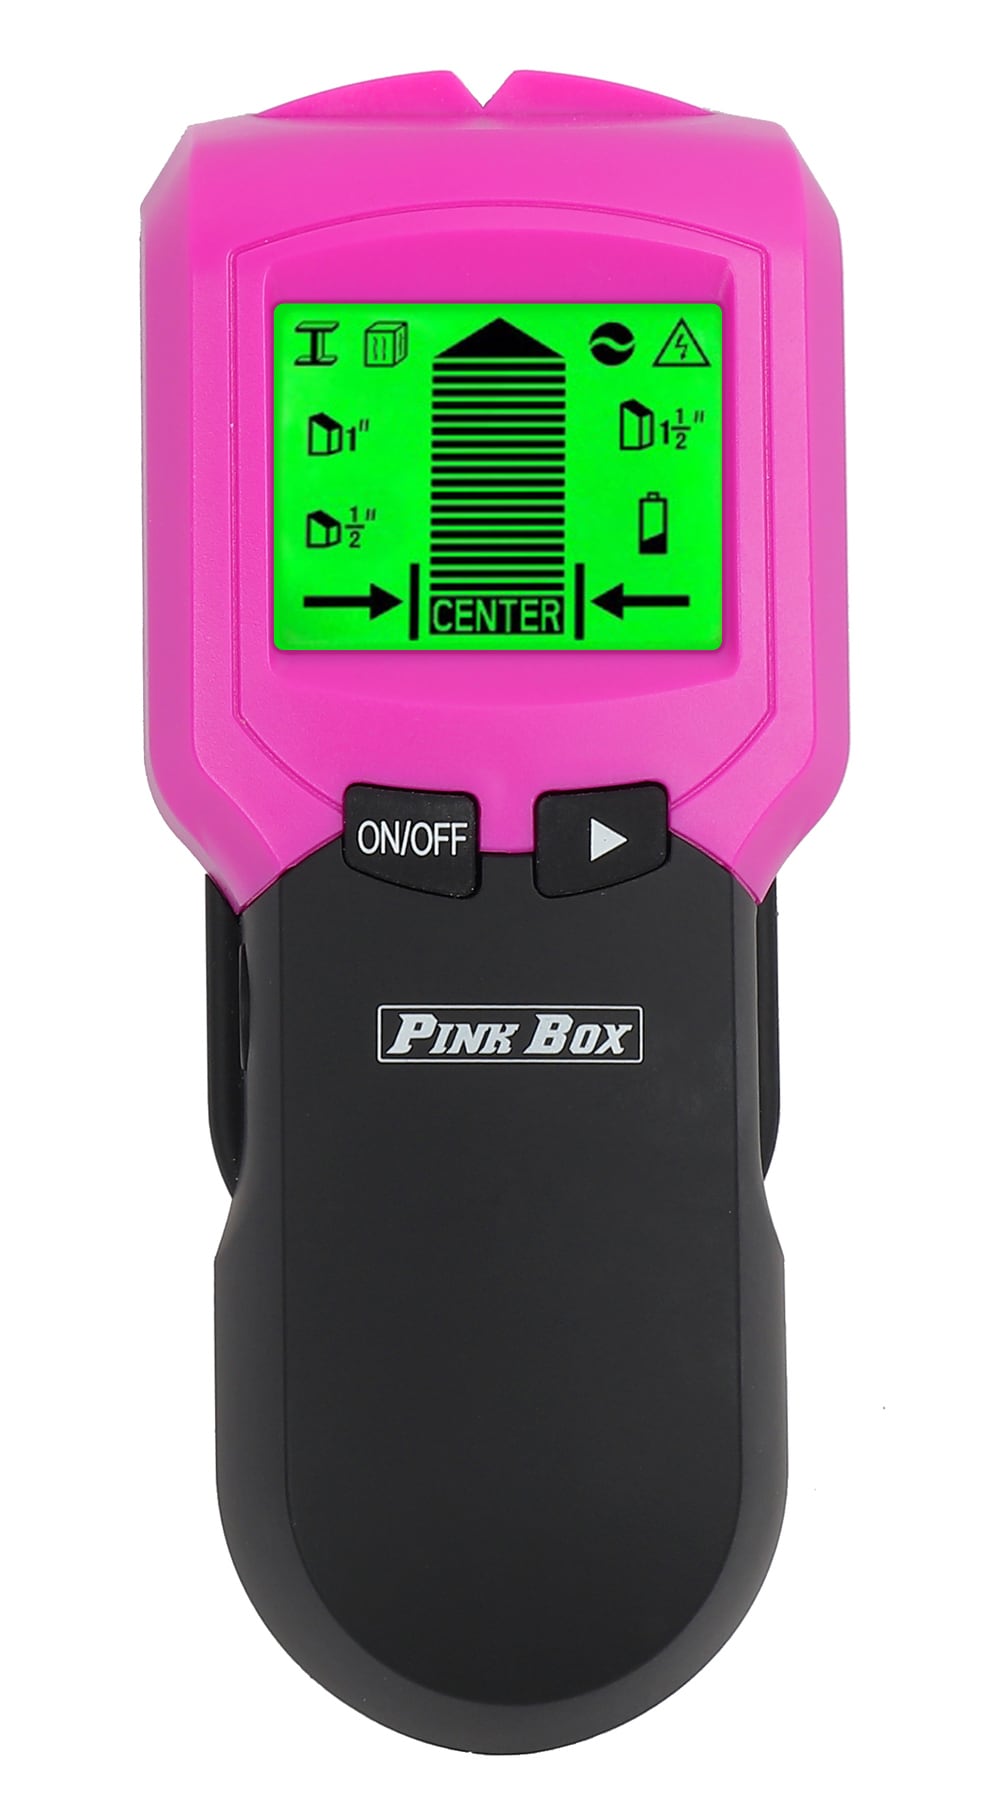 The Original Pink Box Pb25ltm Auto Locking Tape Measure, 25ft, Pink